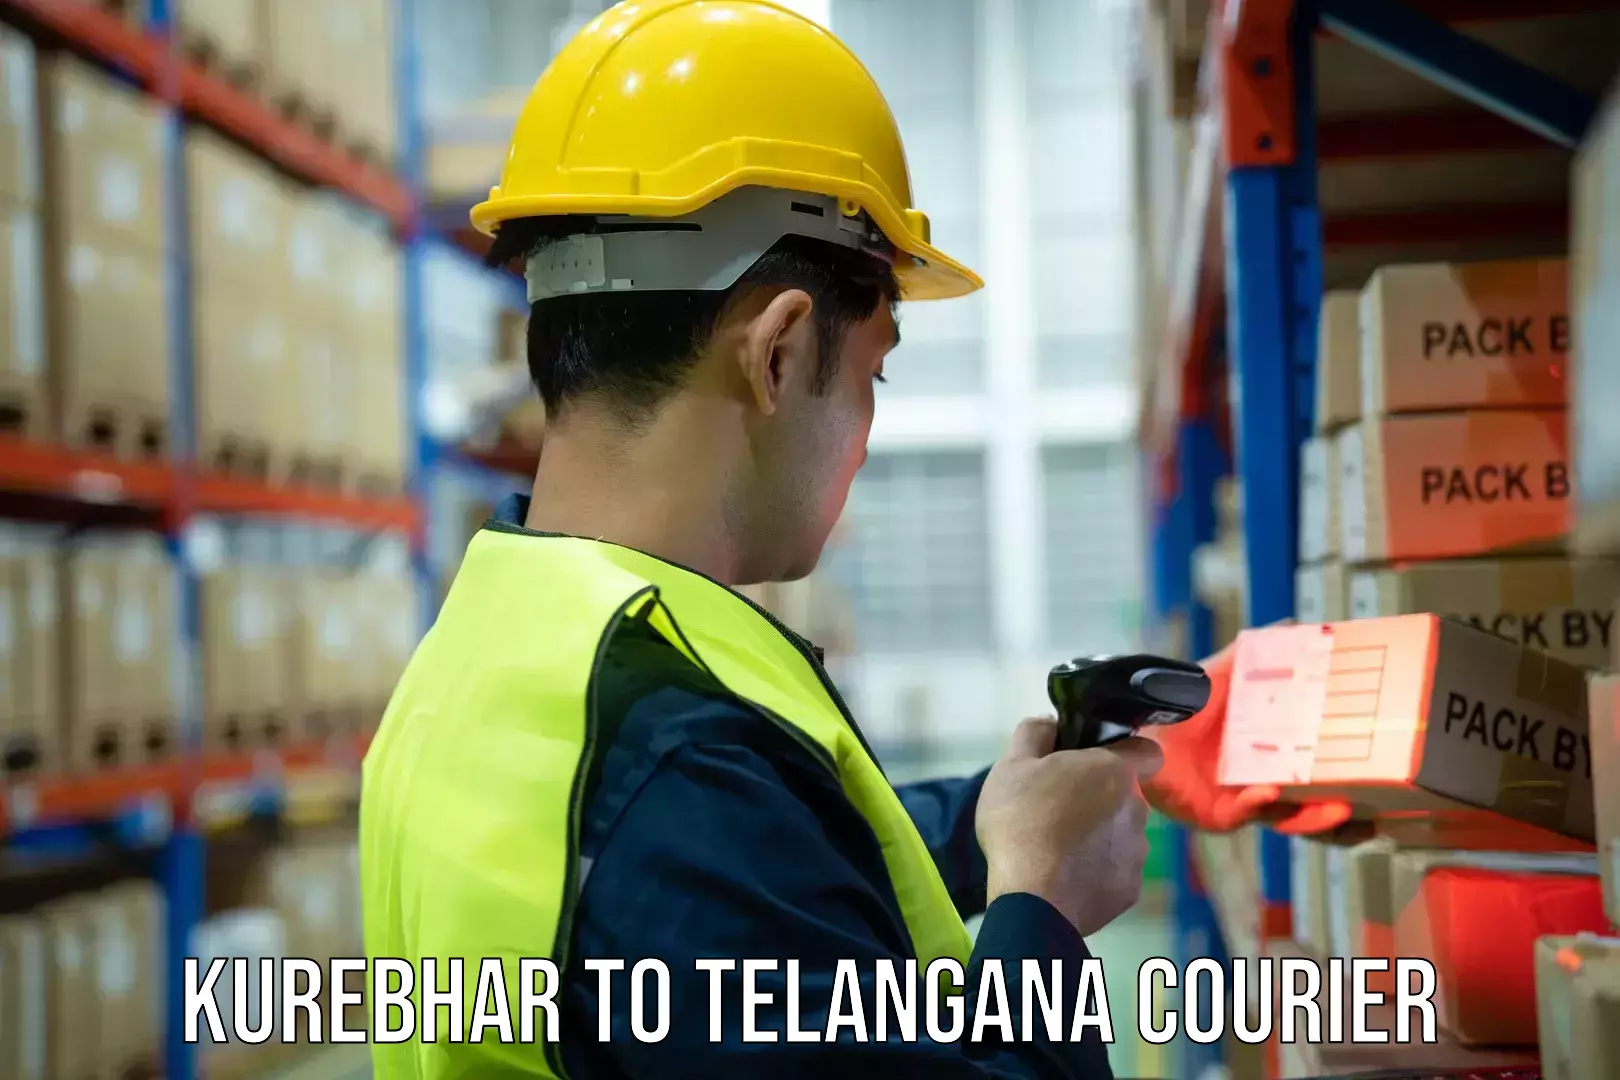 Courier service comparison Kurebhar to Telangana